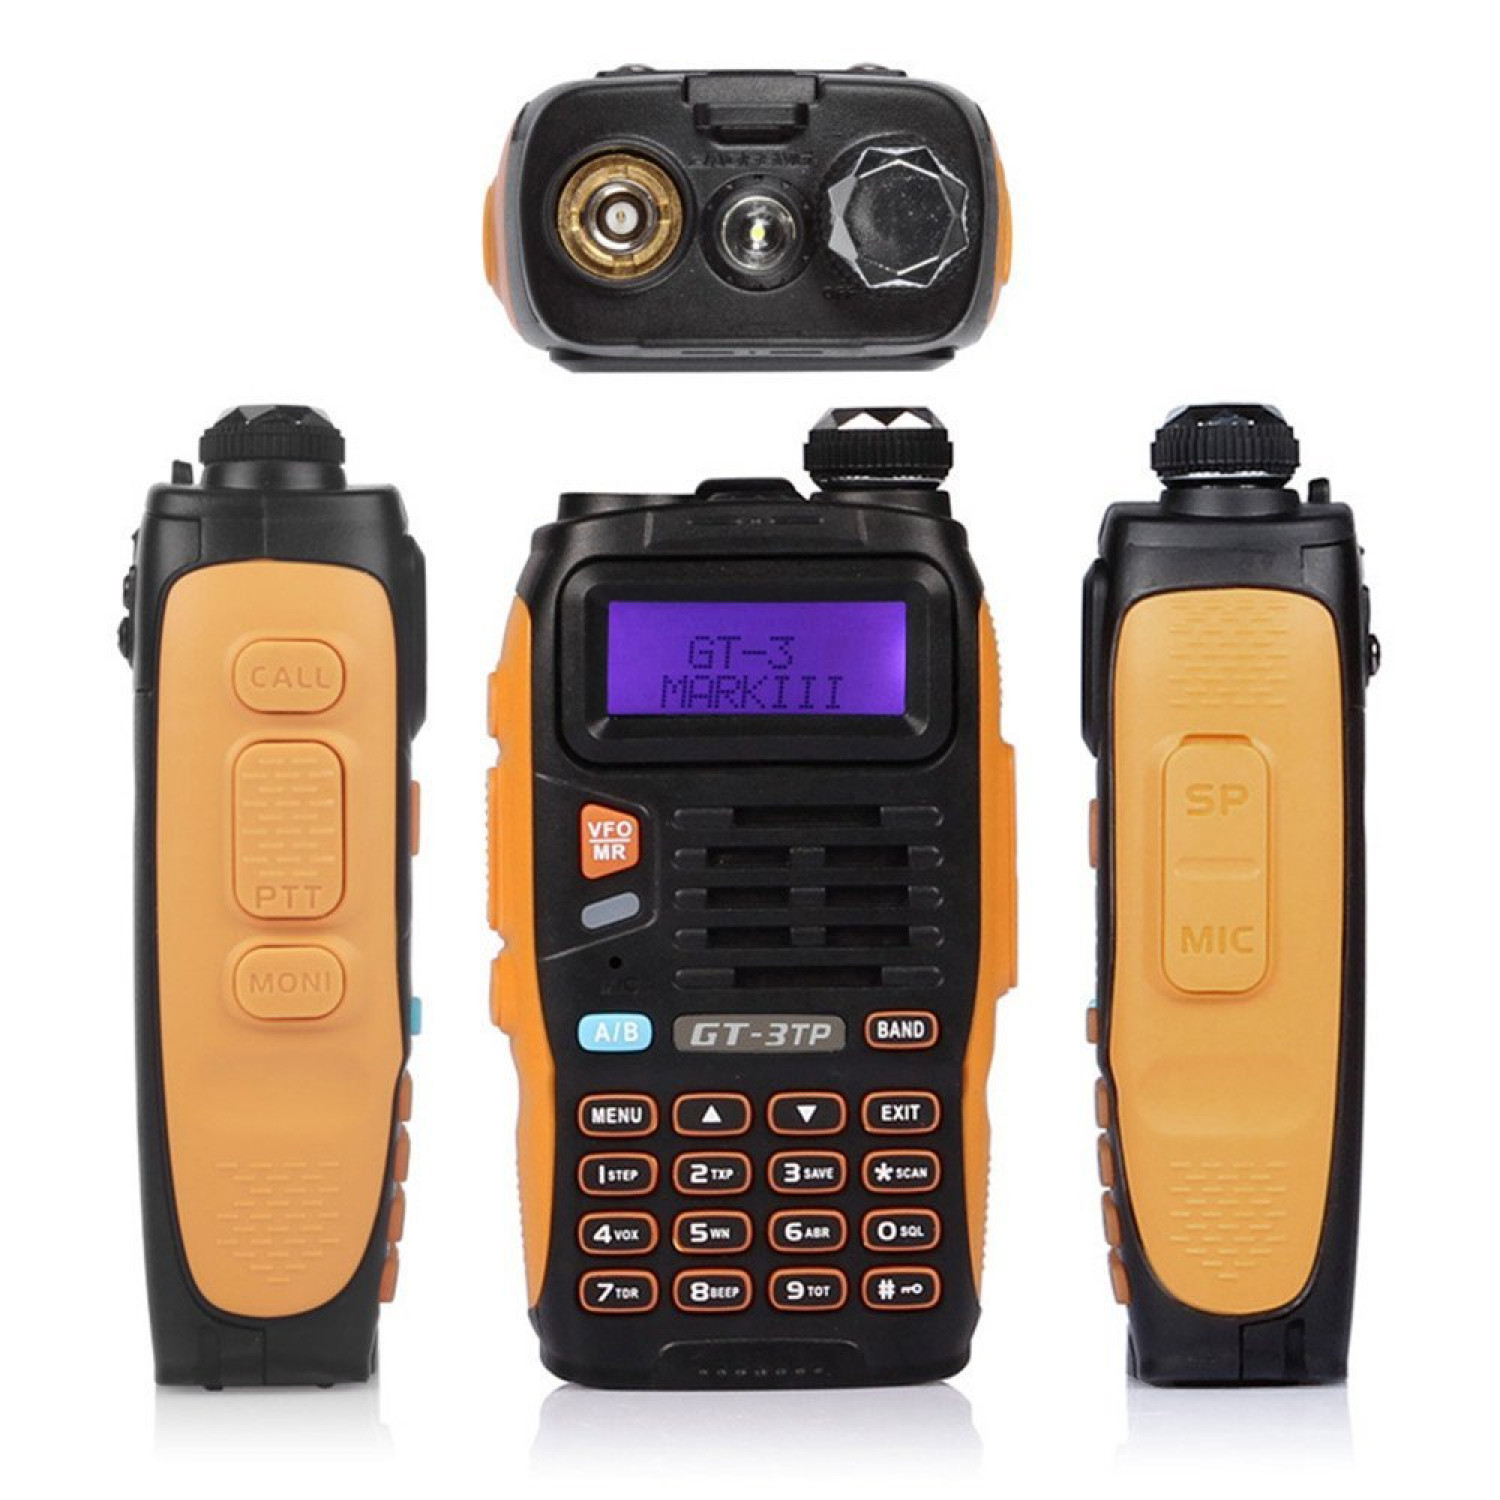 Handheld Radio Scanner Way Digital Transceiver Police Ham Vhf Antenna New Gift Ebay